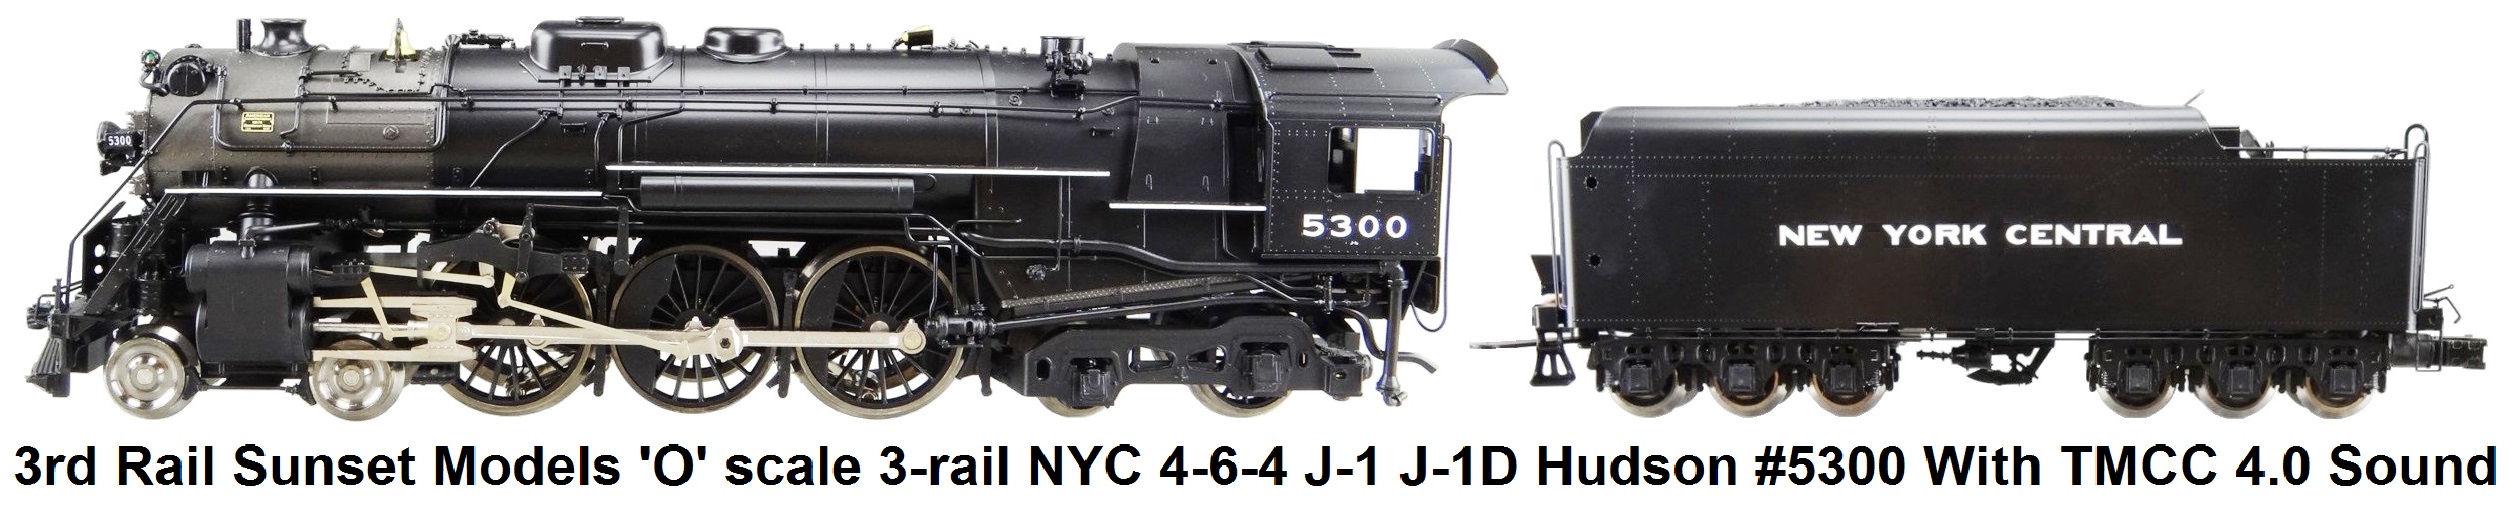 3rd Rail Sunset Models 'O' scale 3-rail NYC 4-6-4 J-1 J-1D Hudson #5300 With TMCC 4.0 Sound